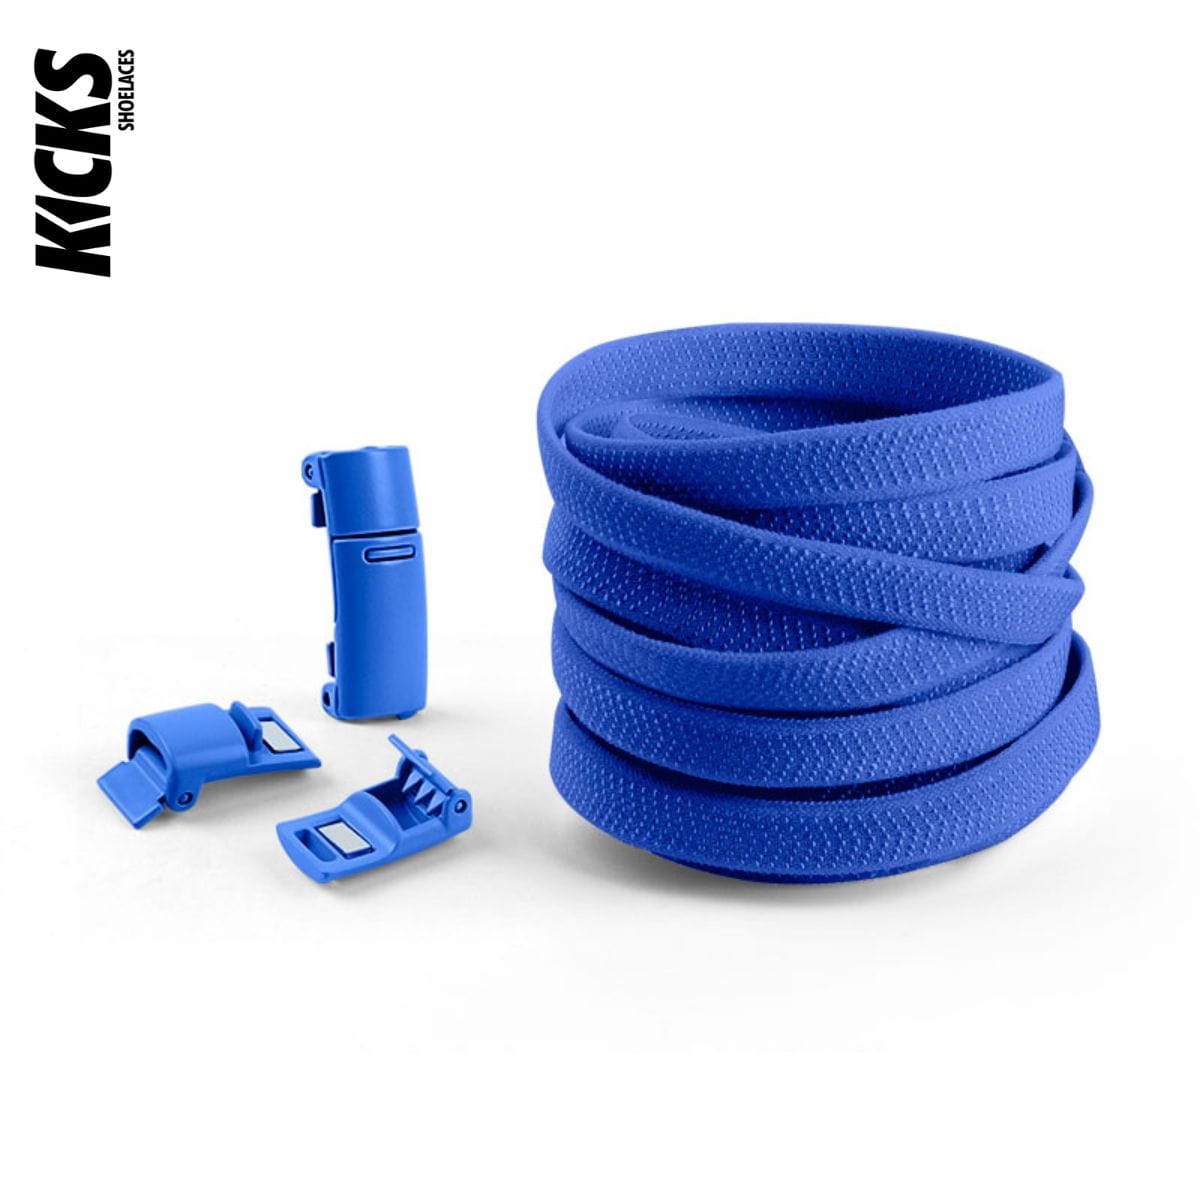 Royal Blue No-Tie Shoelaces with Magnetic Locks - Kicks Shoelaces